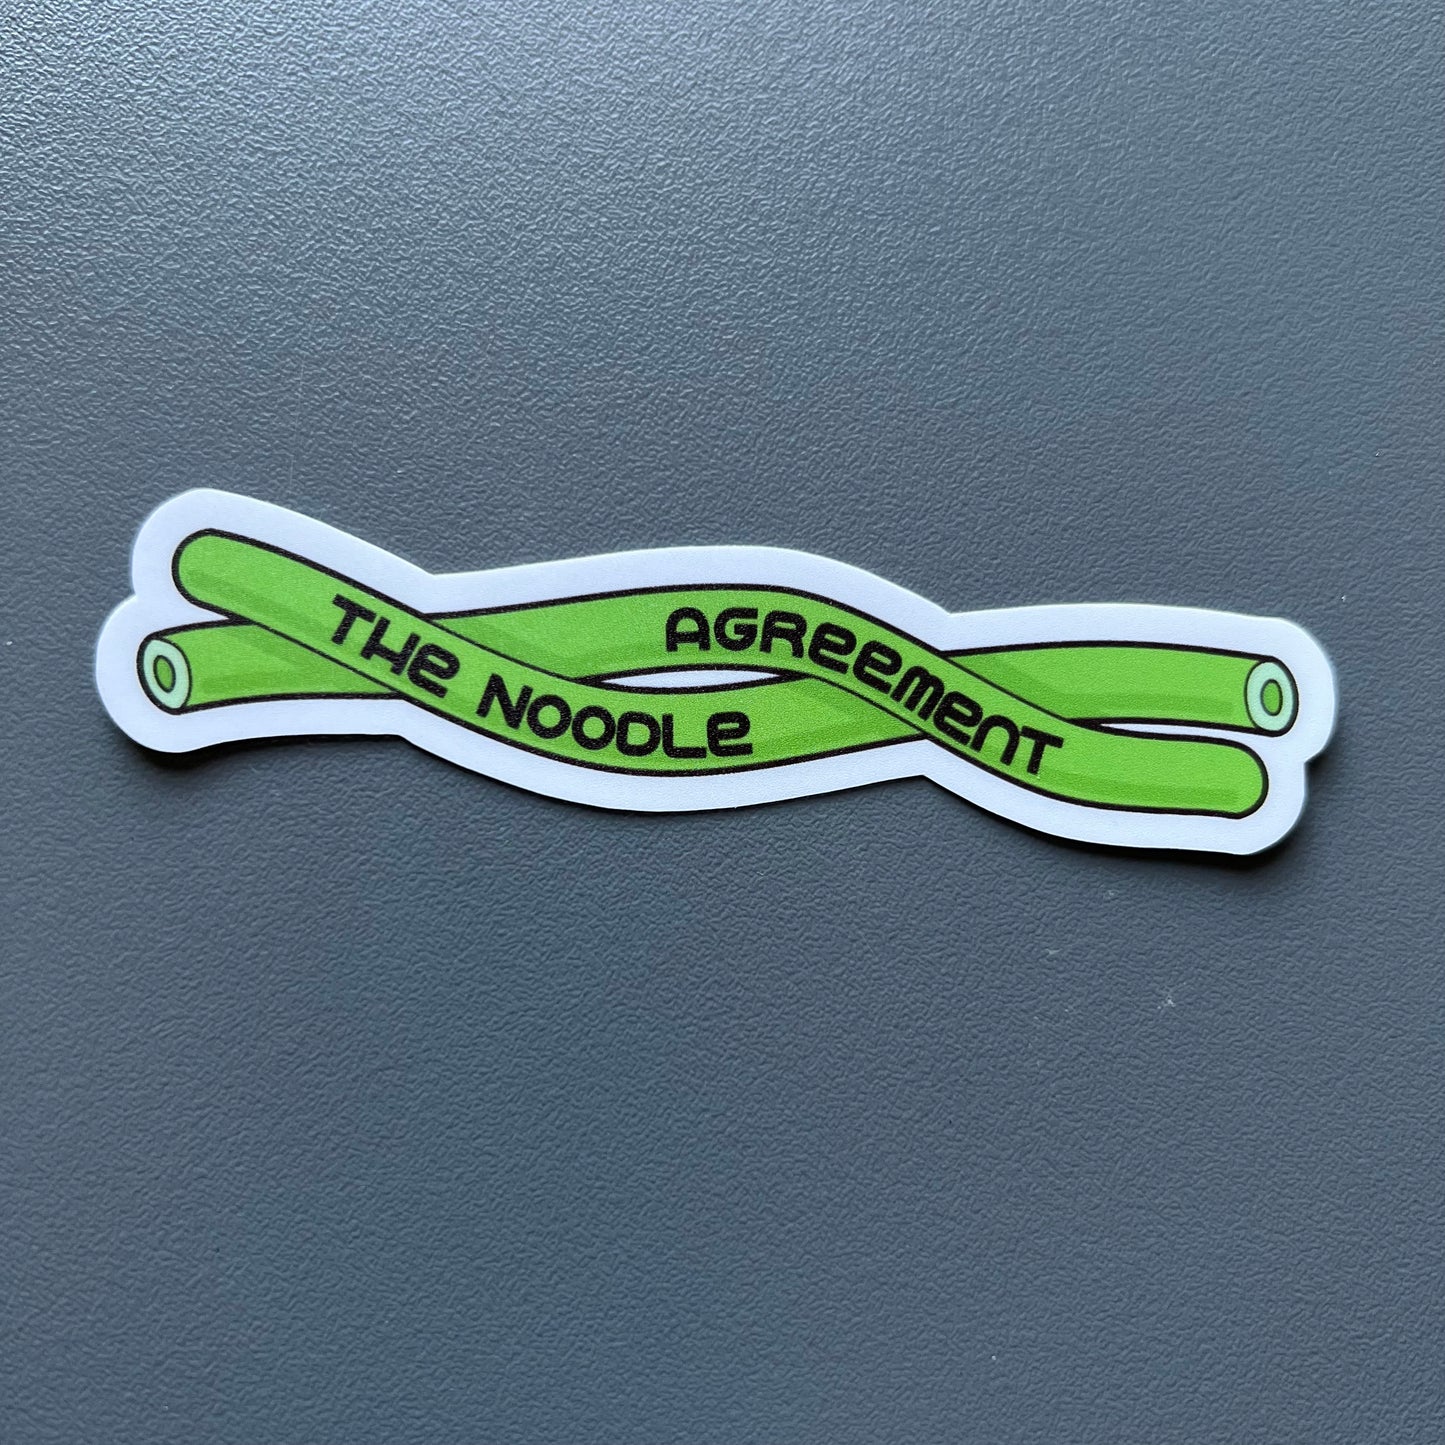 Noodle Agreement Sticker